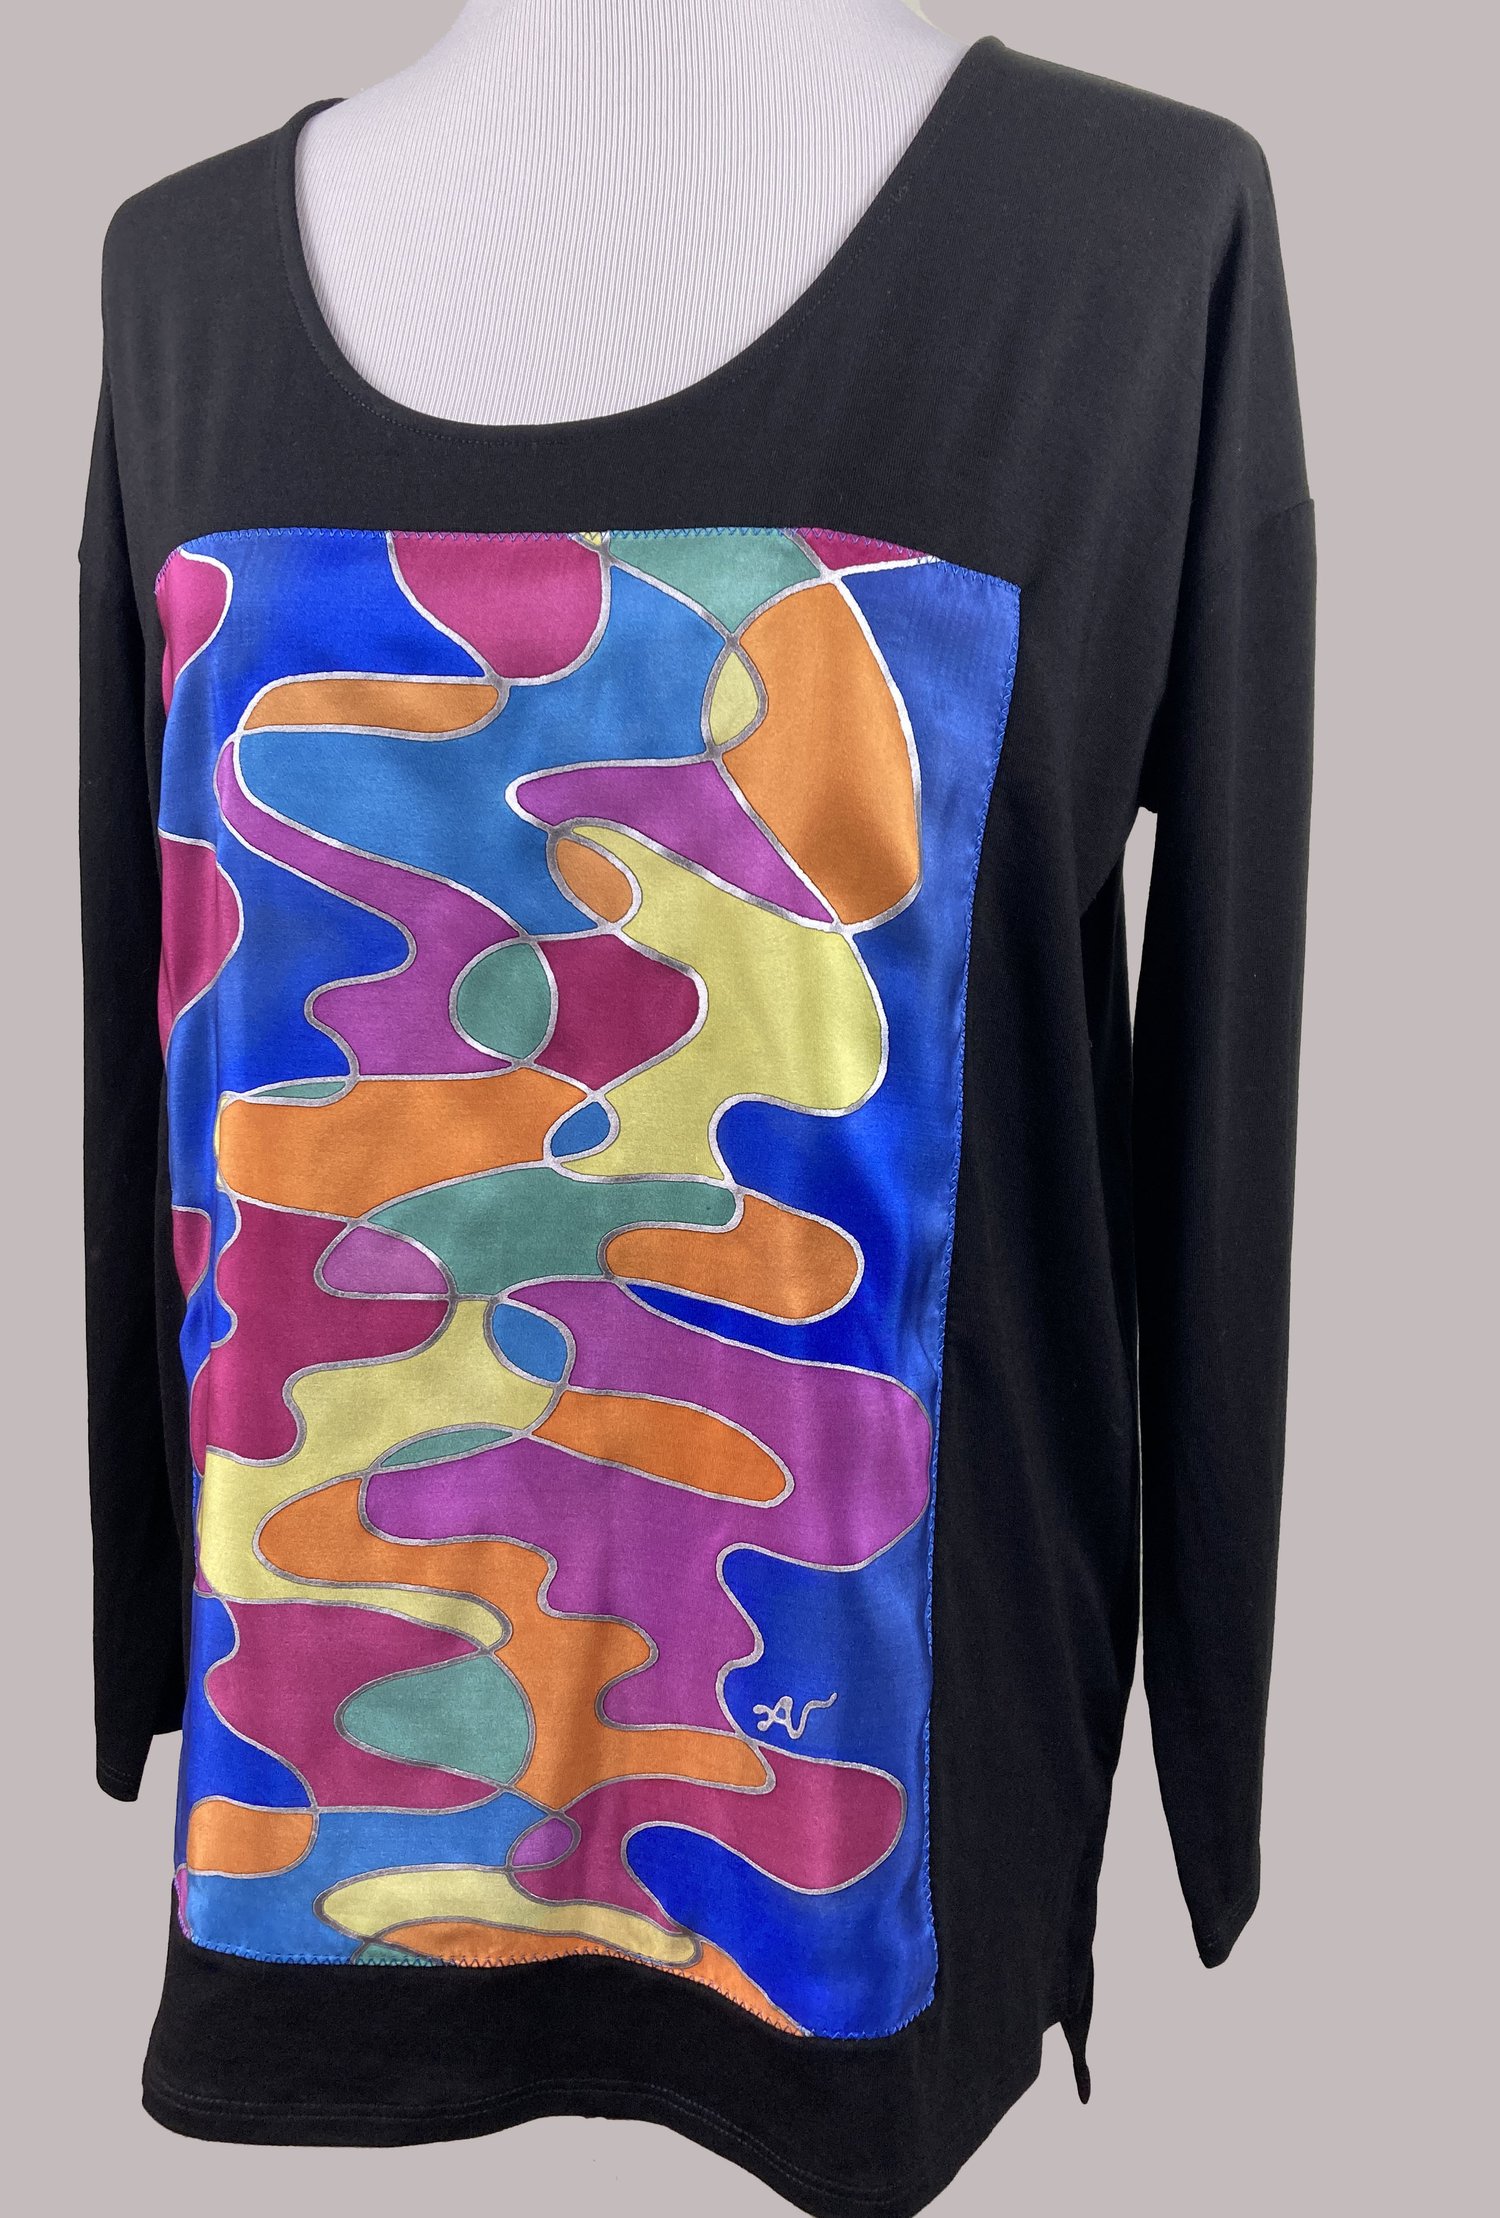 abstract geometry tshirt — Silk Closet Art